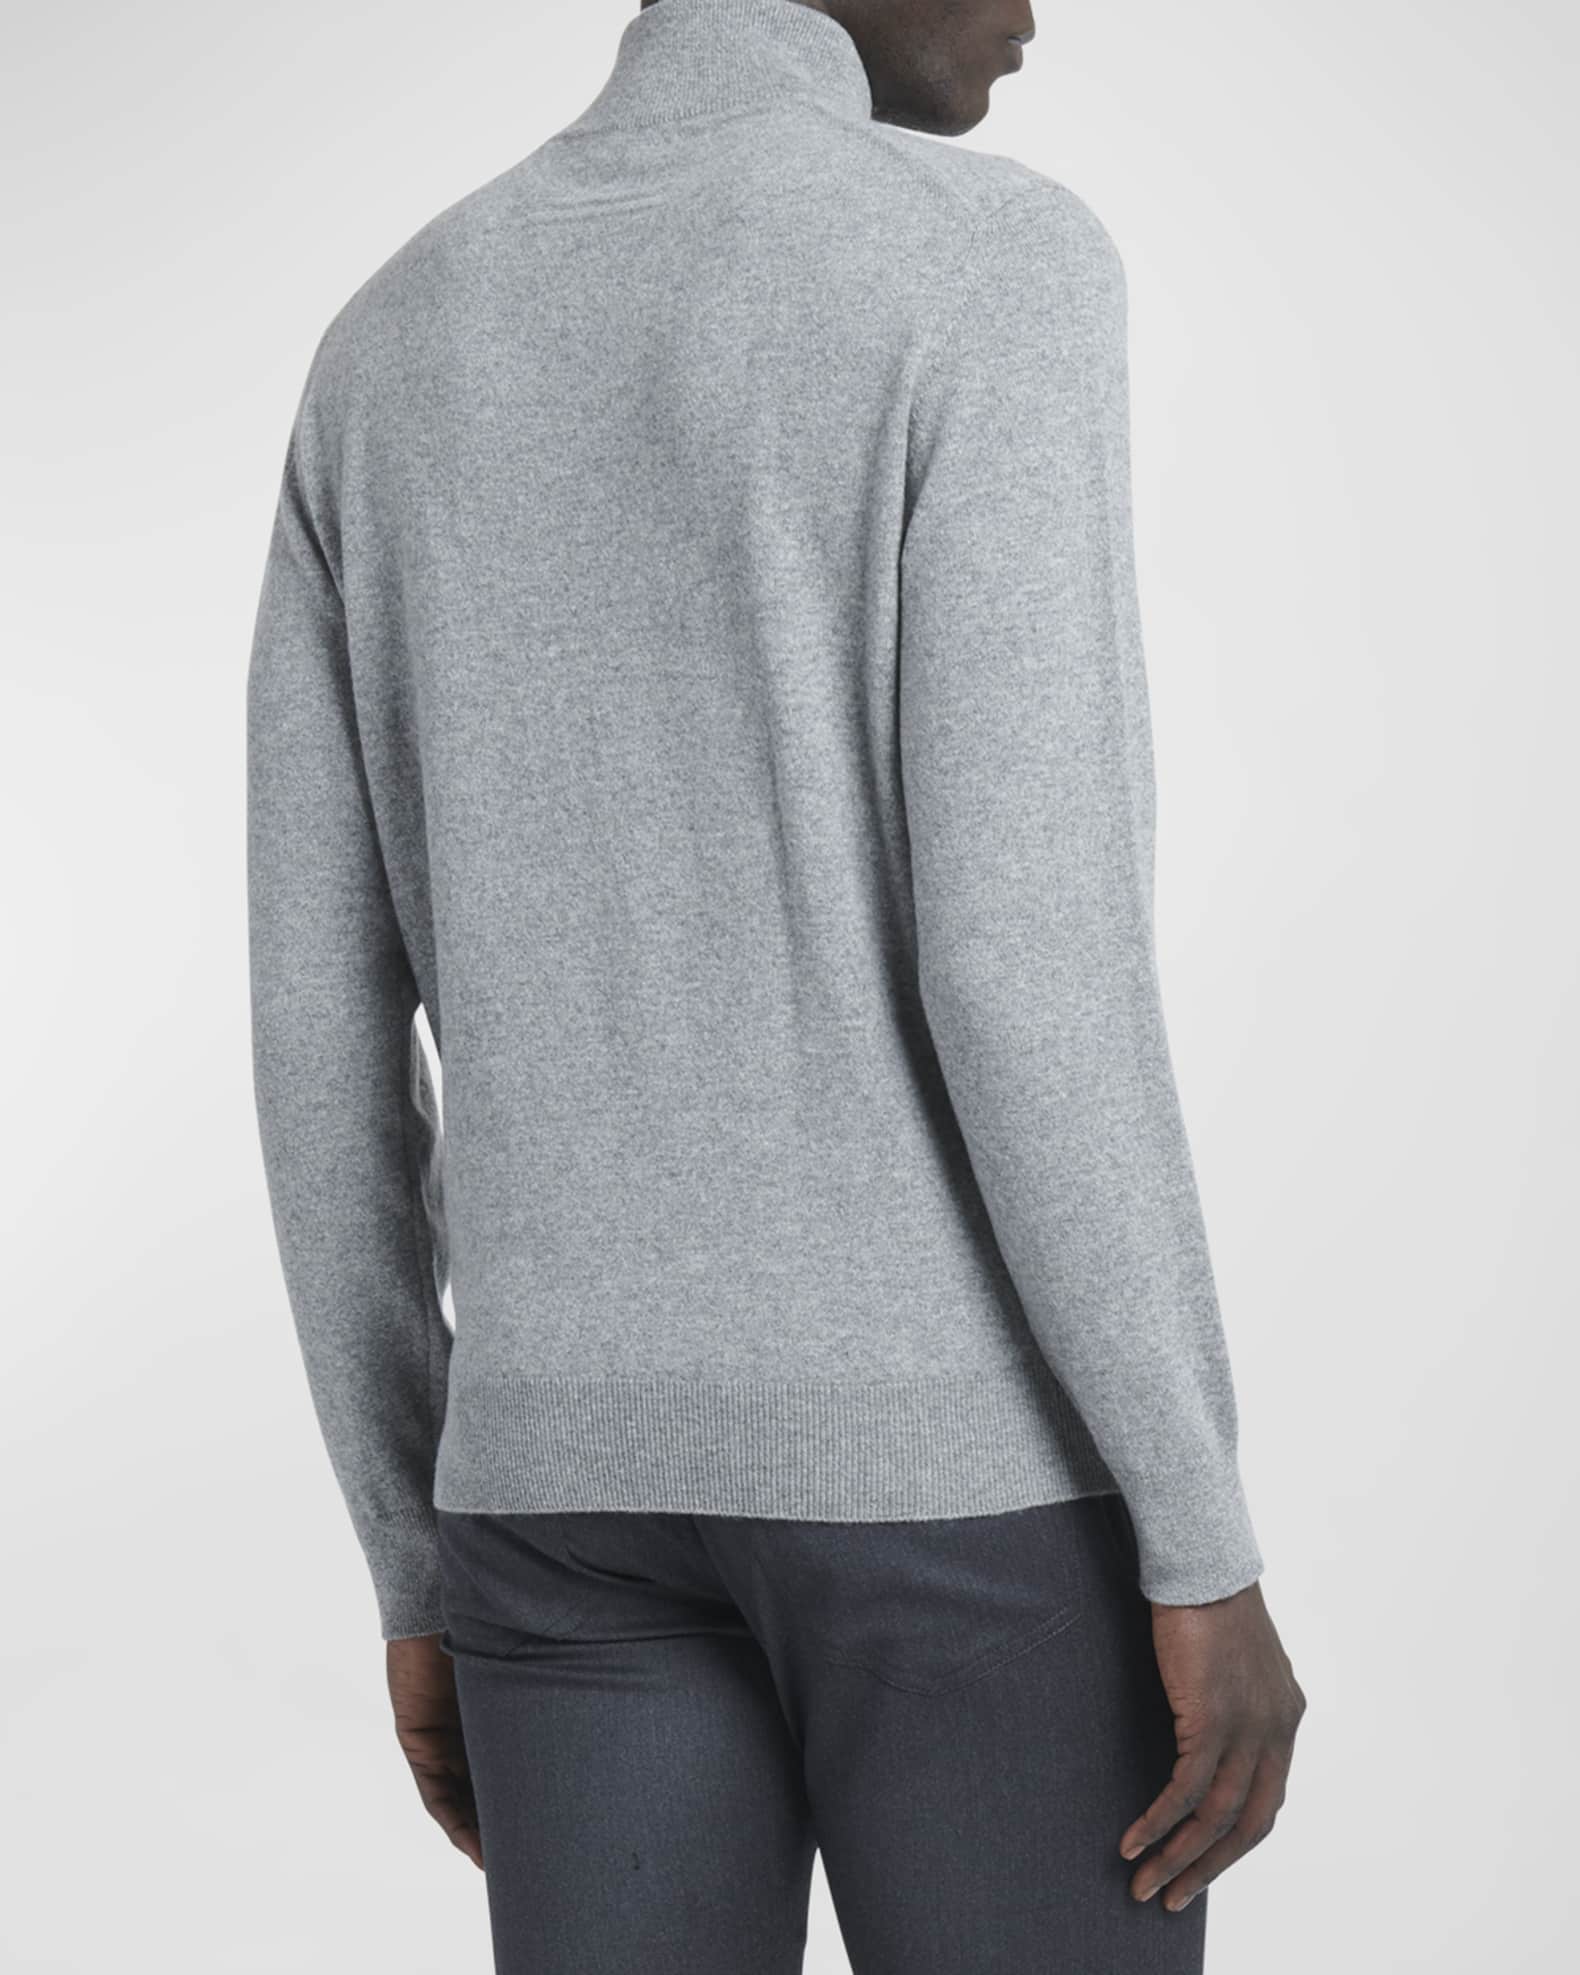 ZEGNA Men's Cashmere Quarter-Zip Sweater | Neiman Marcus